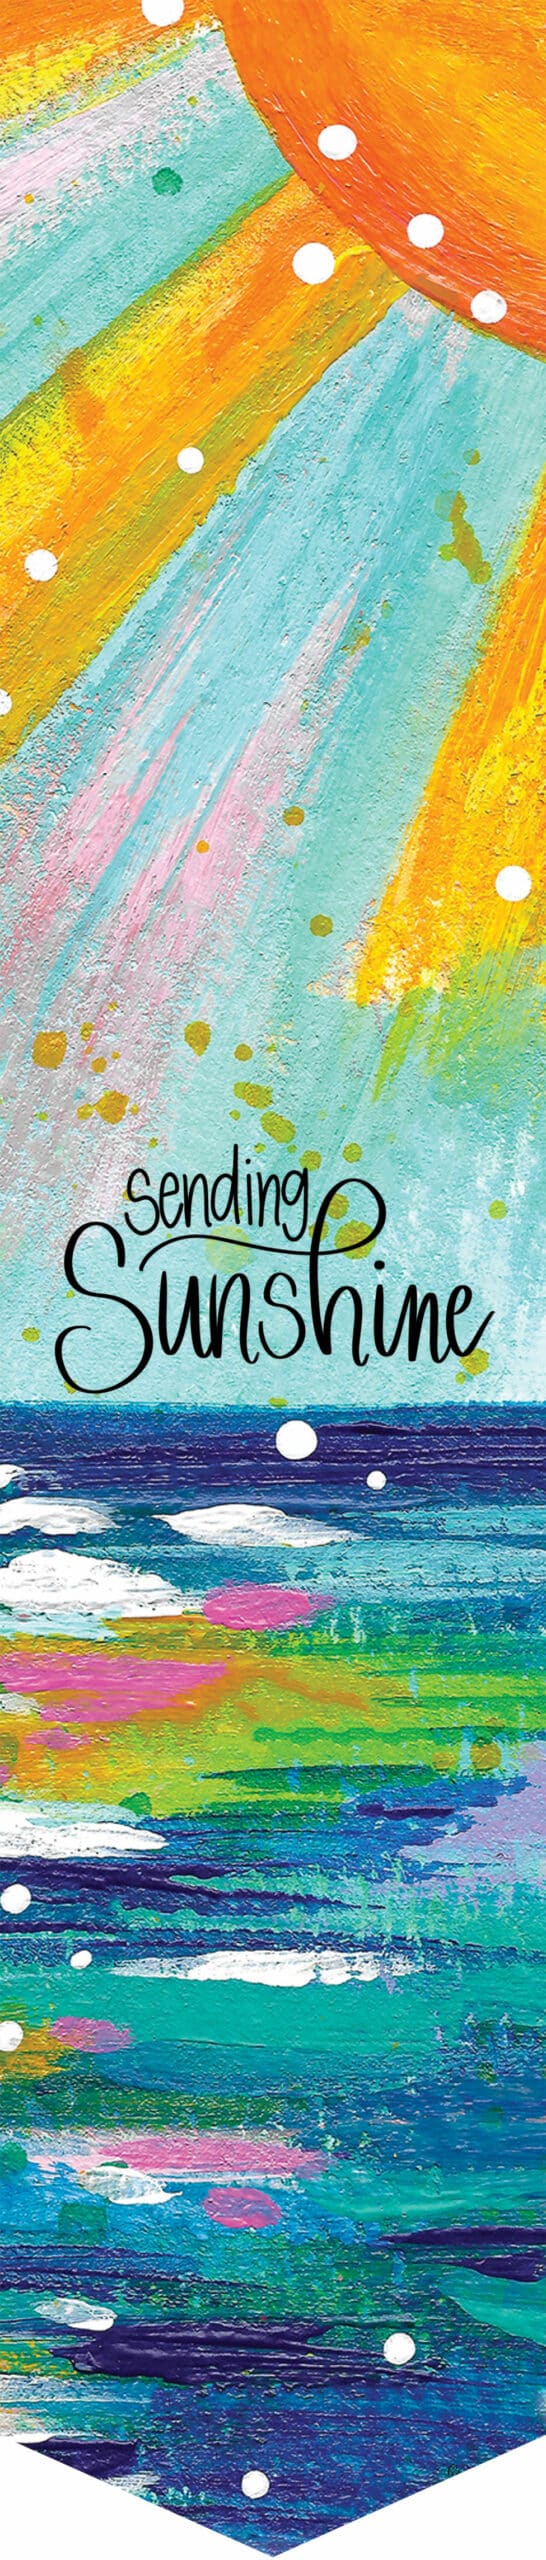 Sending Sunshine-Door Expression